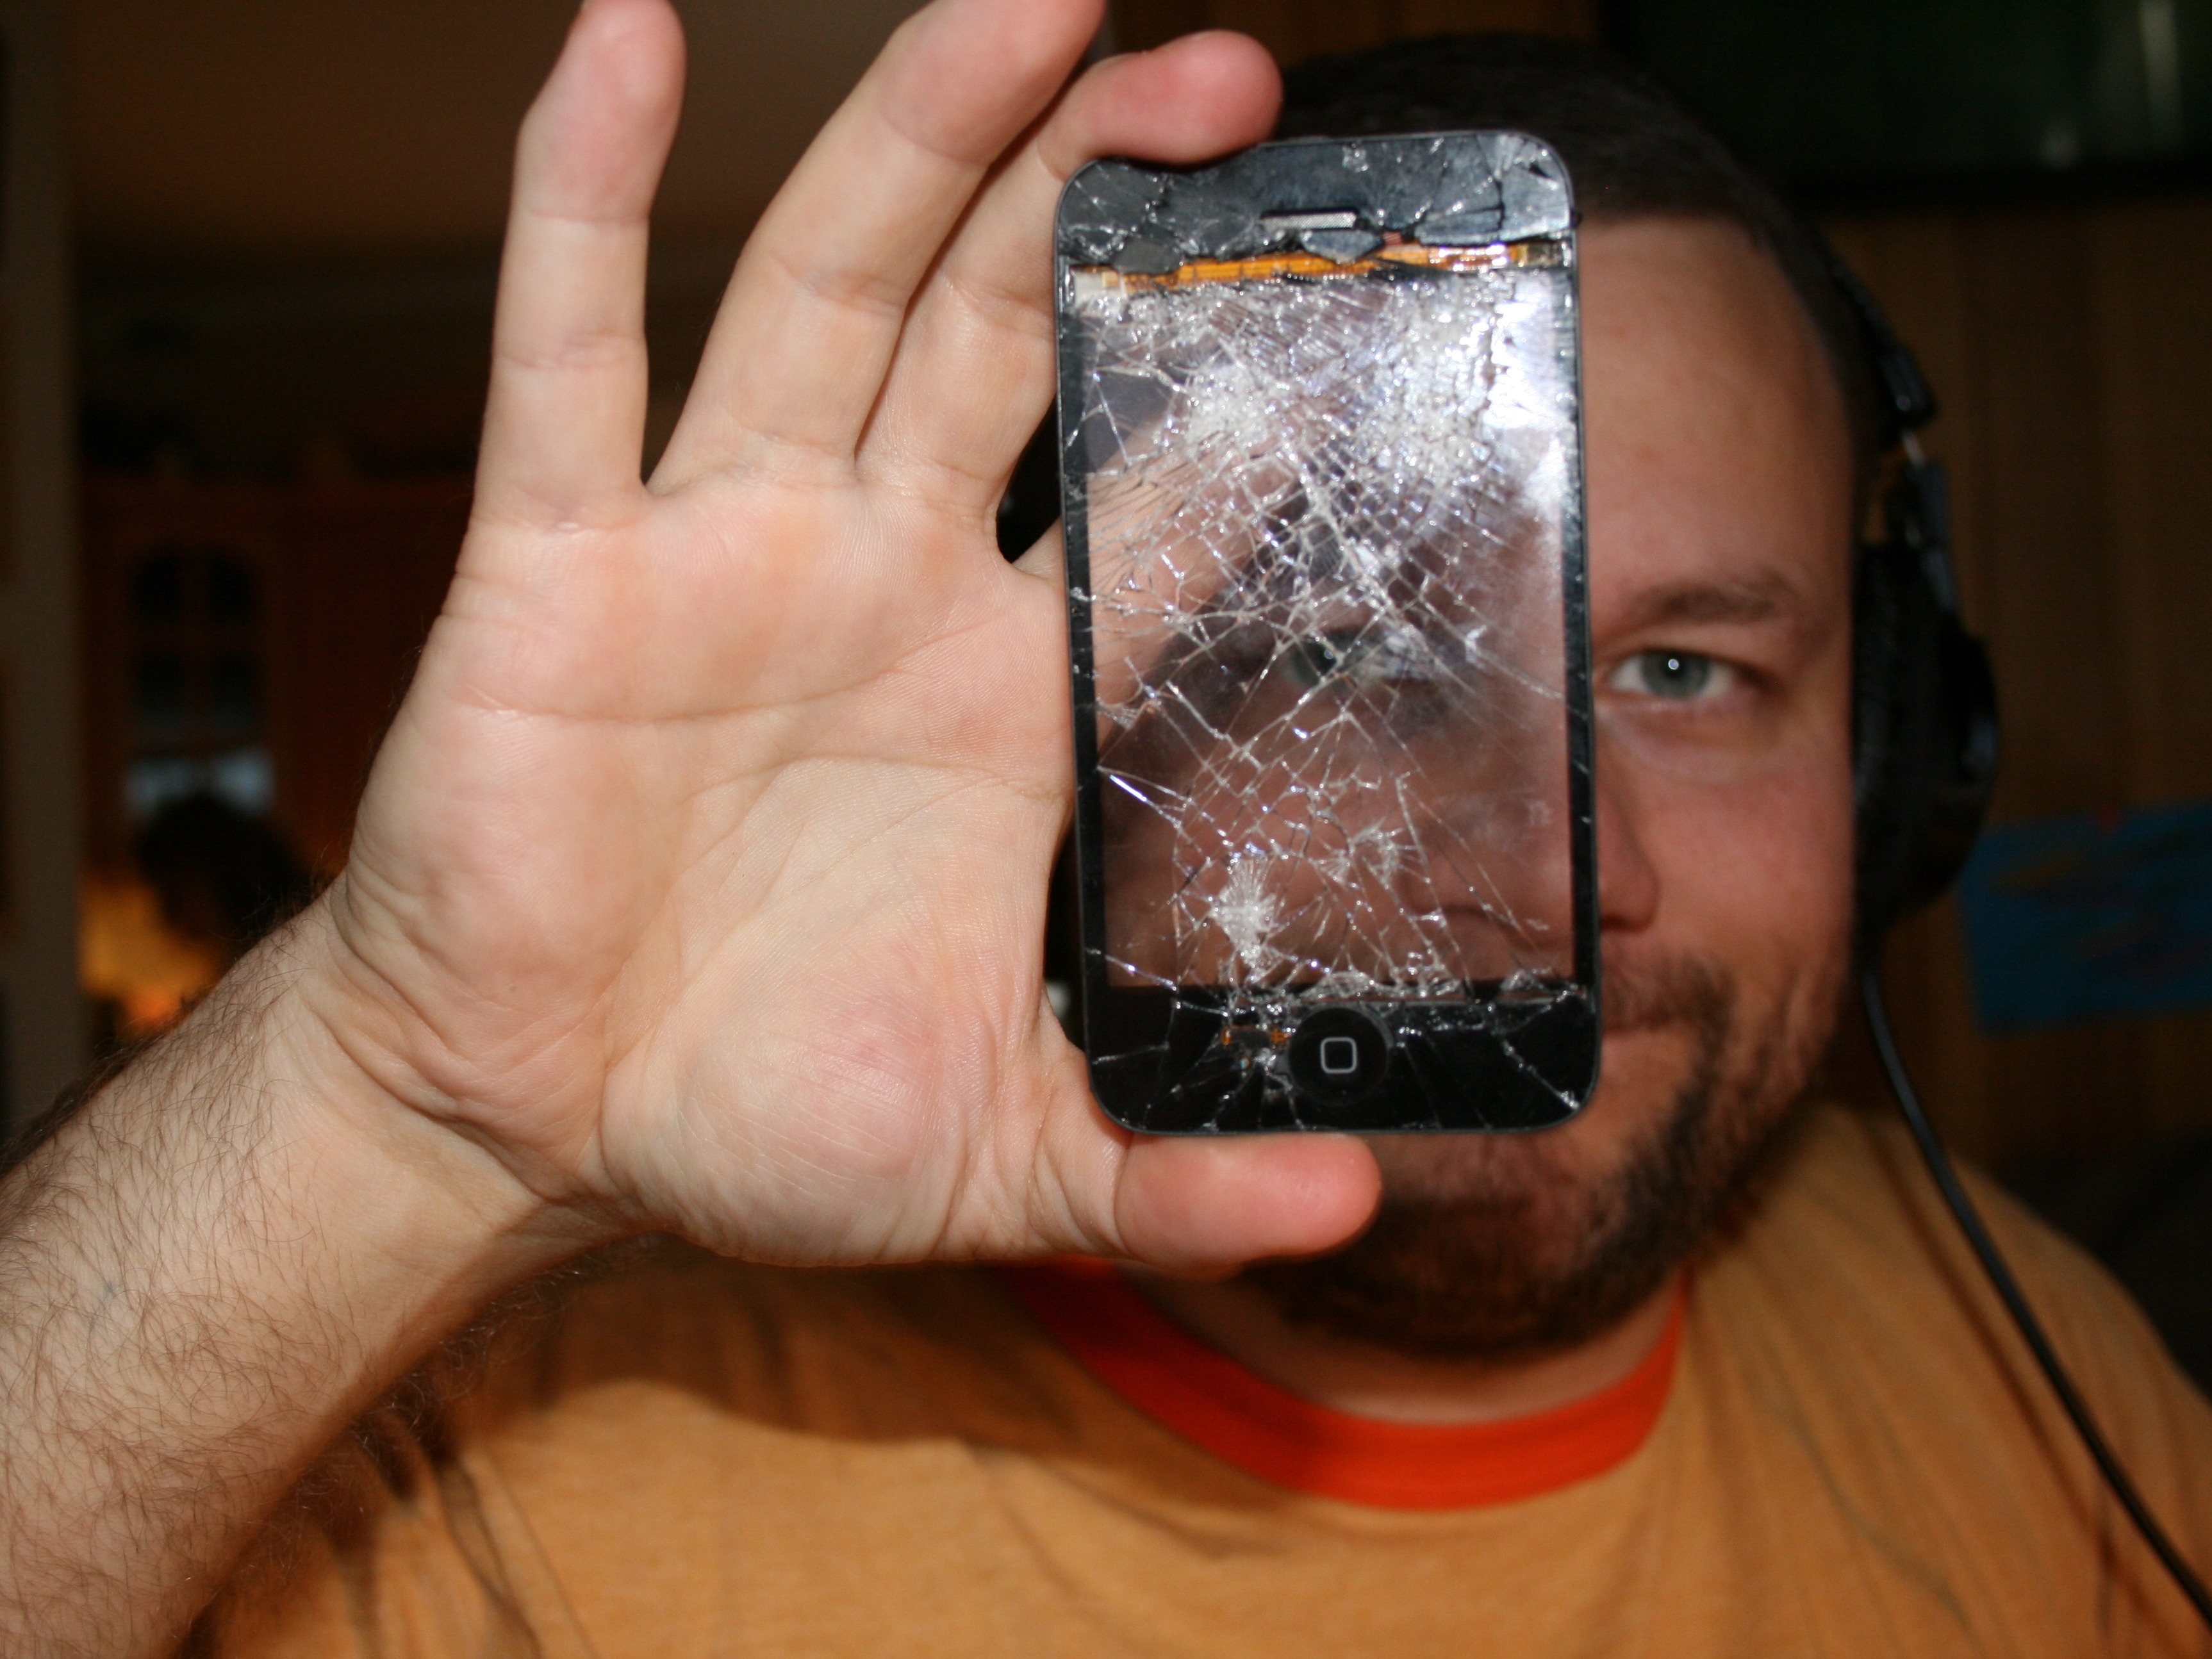 iPhone Touchscreen Repair